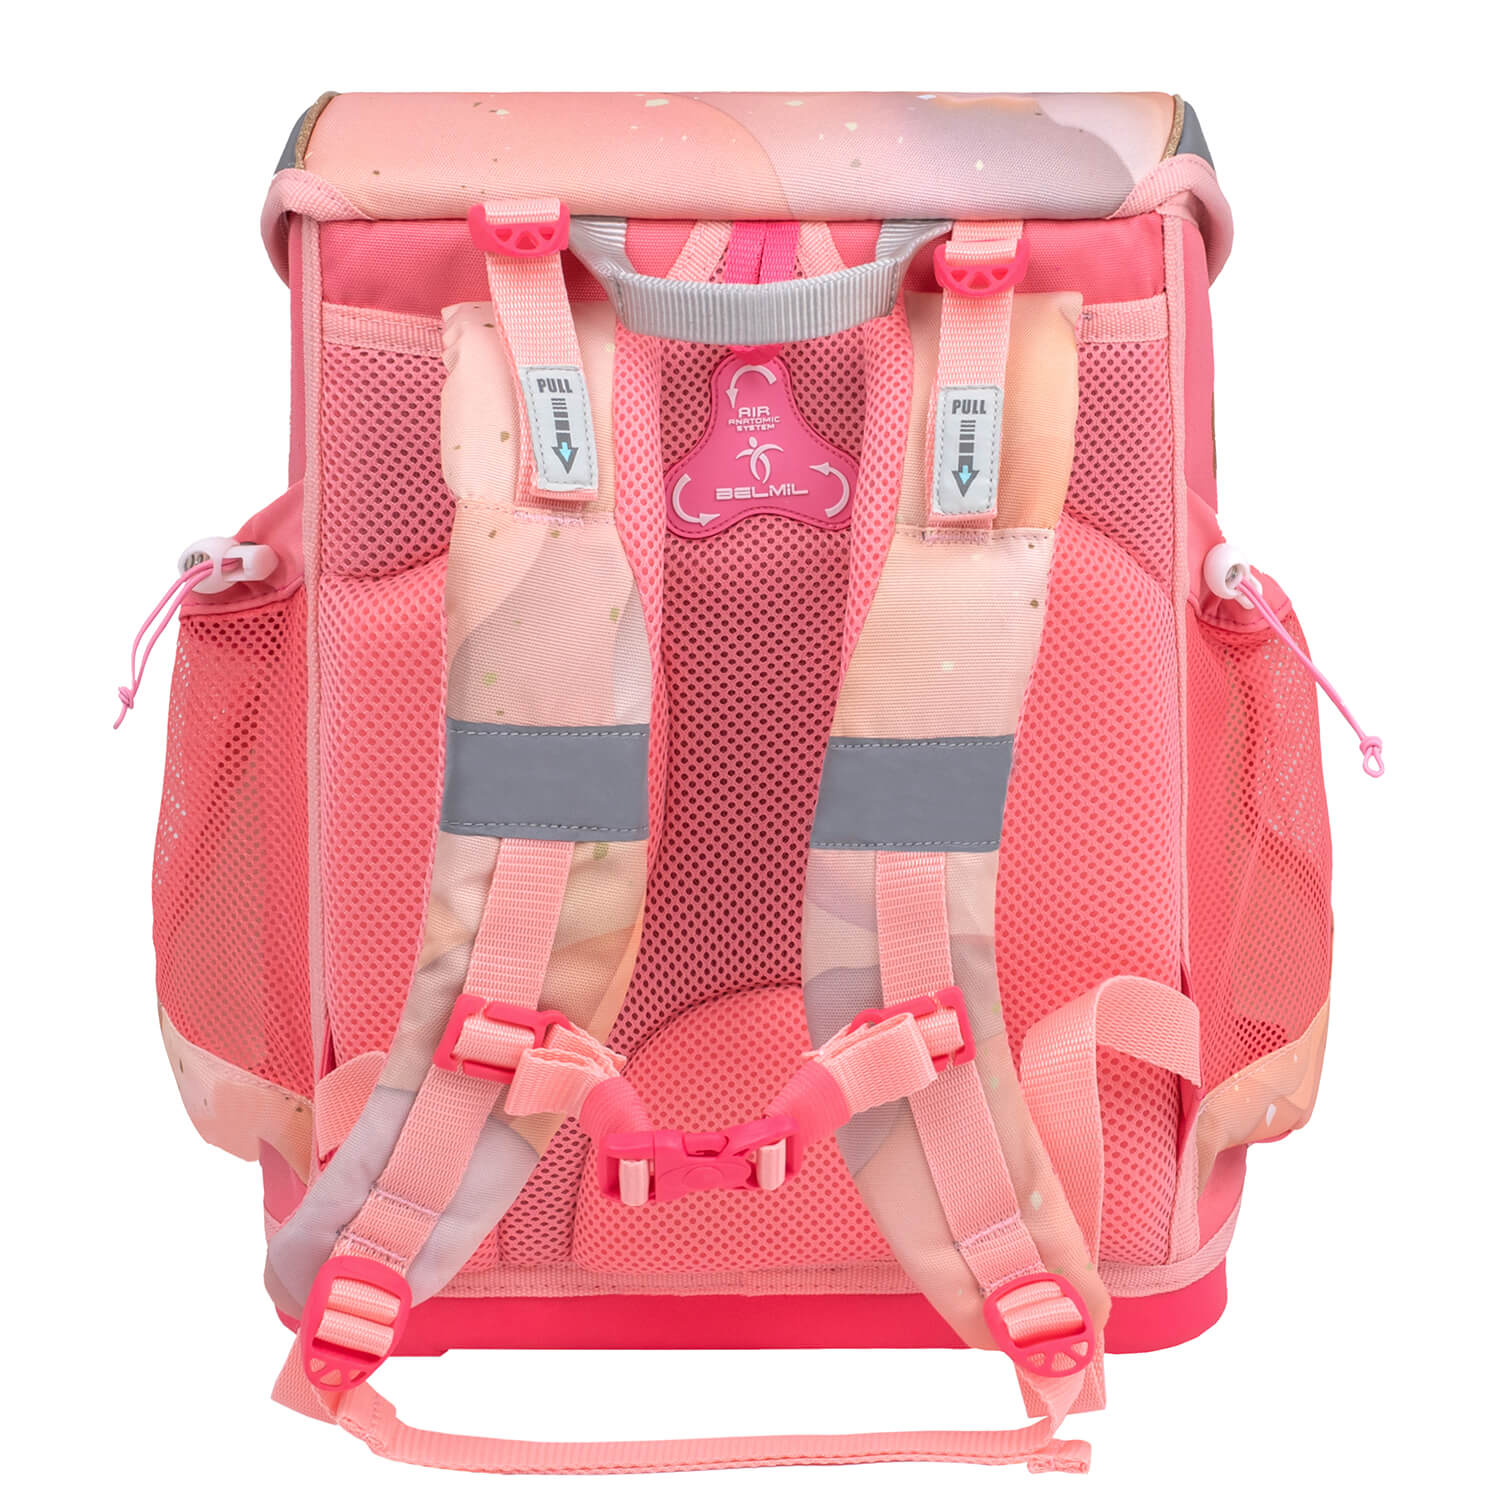 Mini-Fit Marble schoolbag set 4 pcs